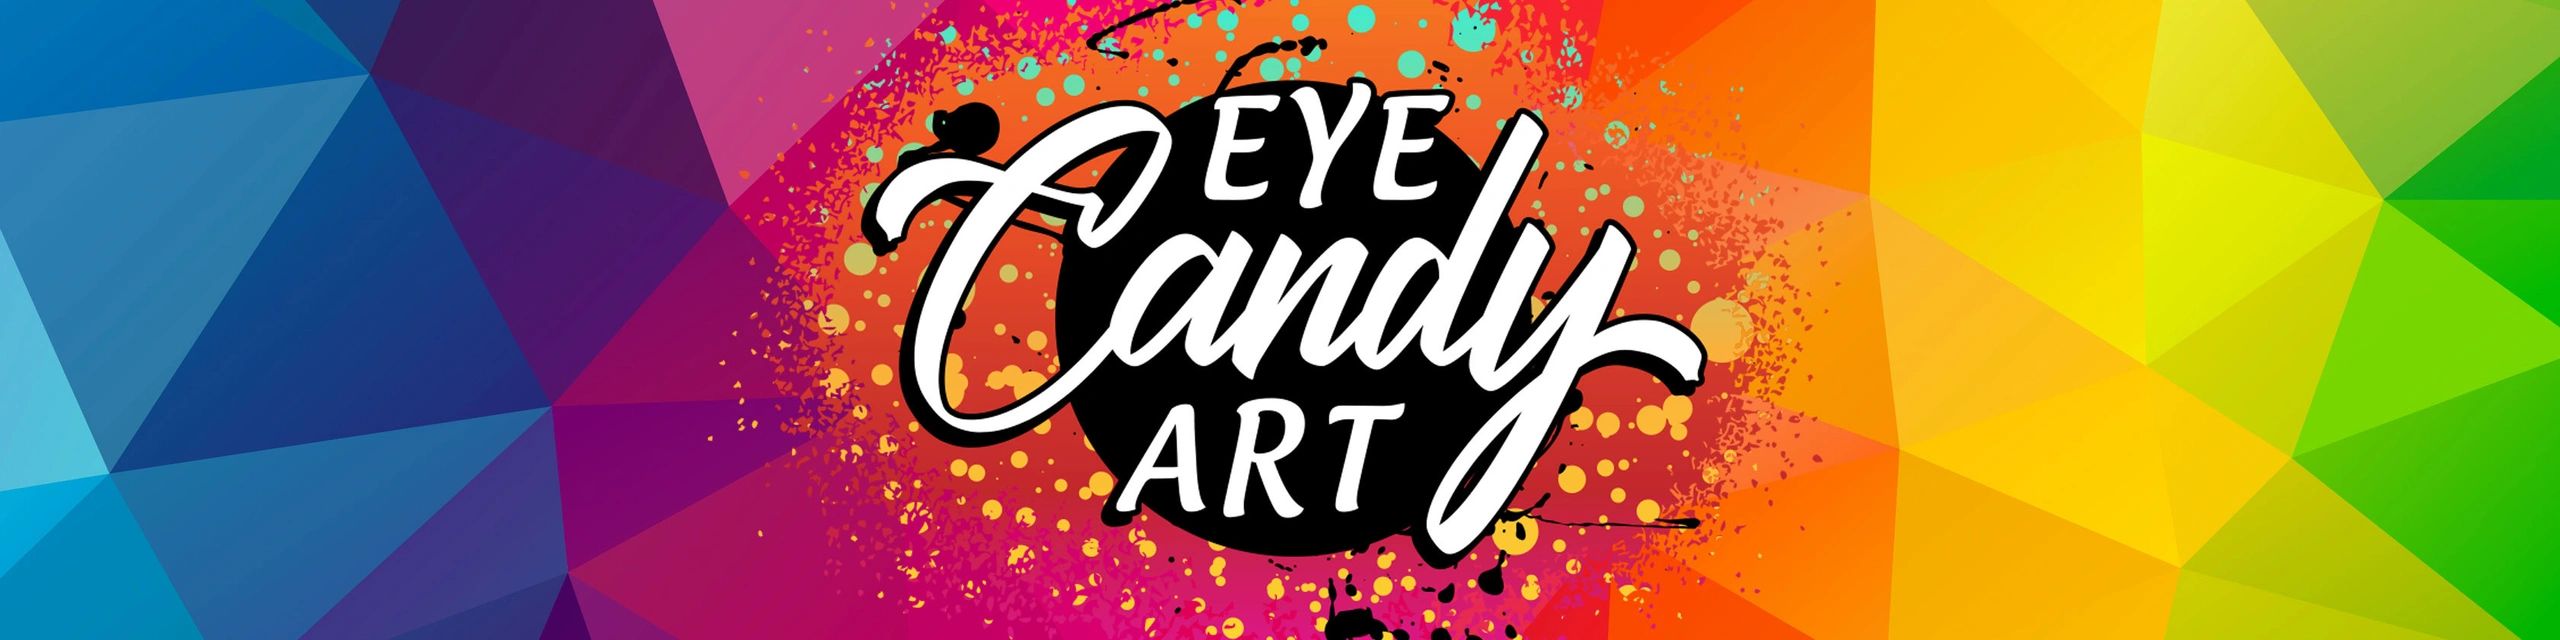 Eye Candy Abstrat Art logo